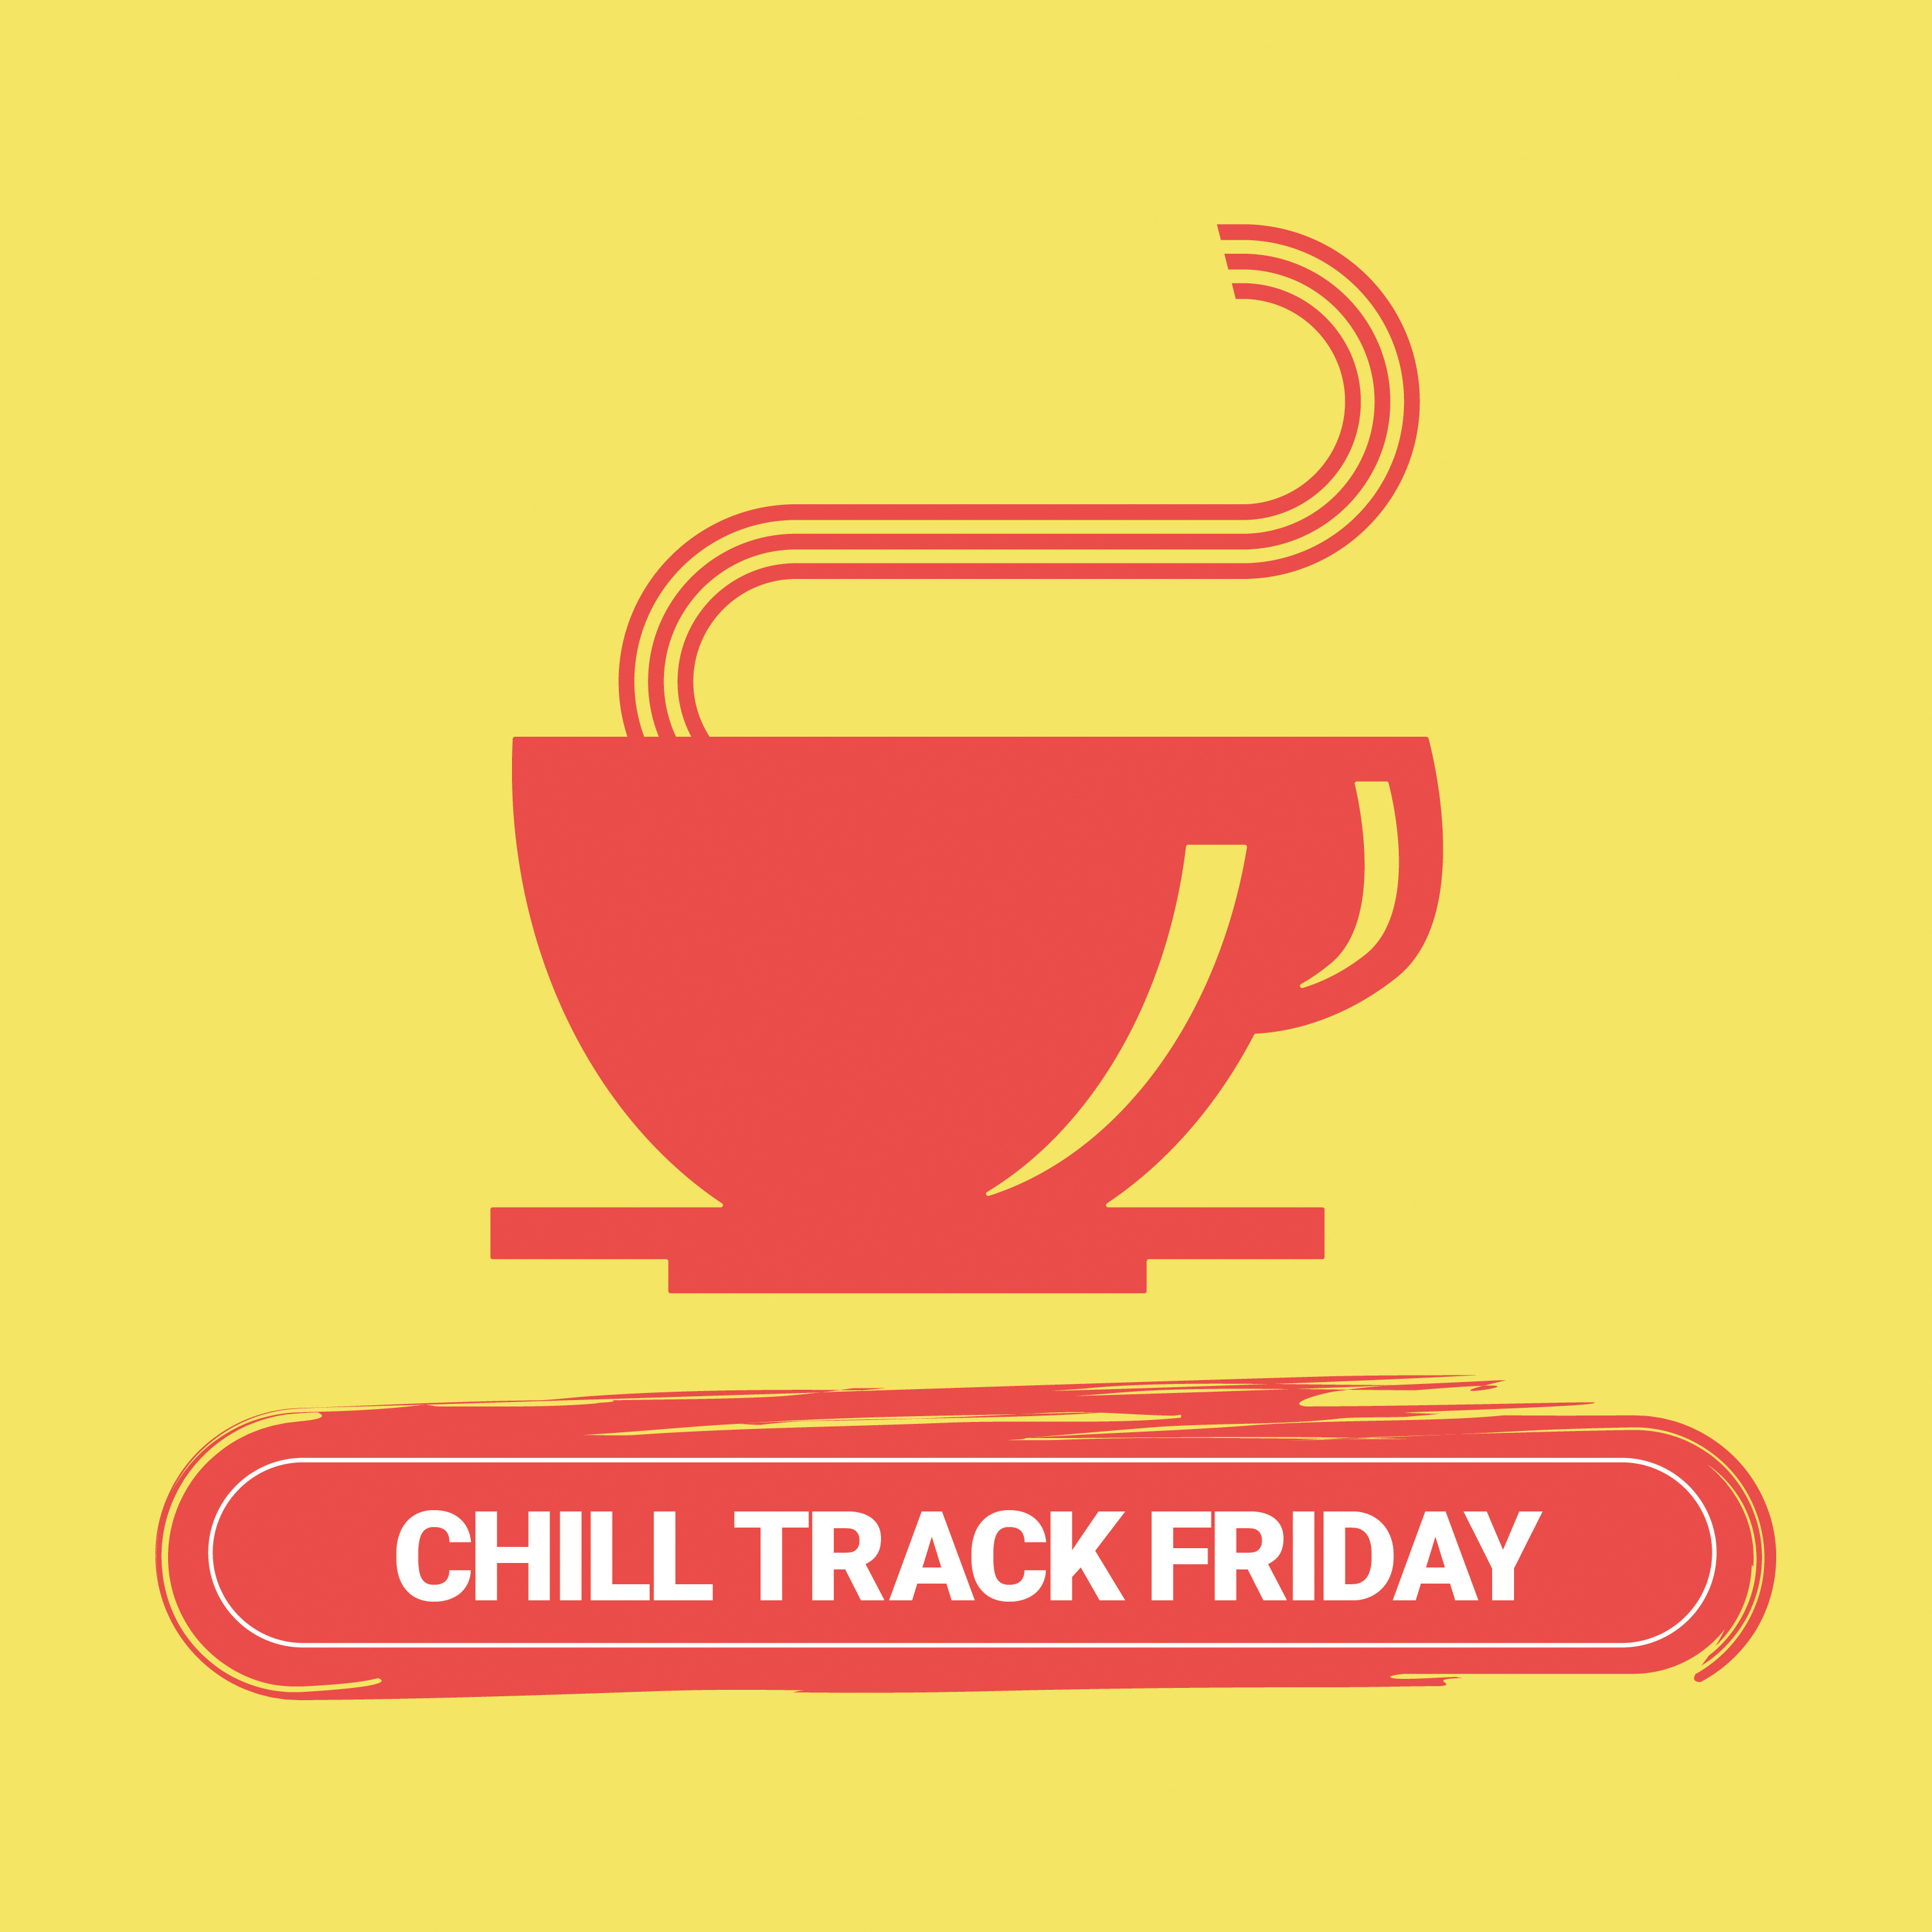 Chill Track Friday